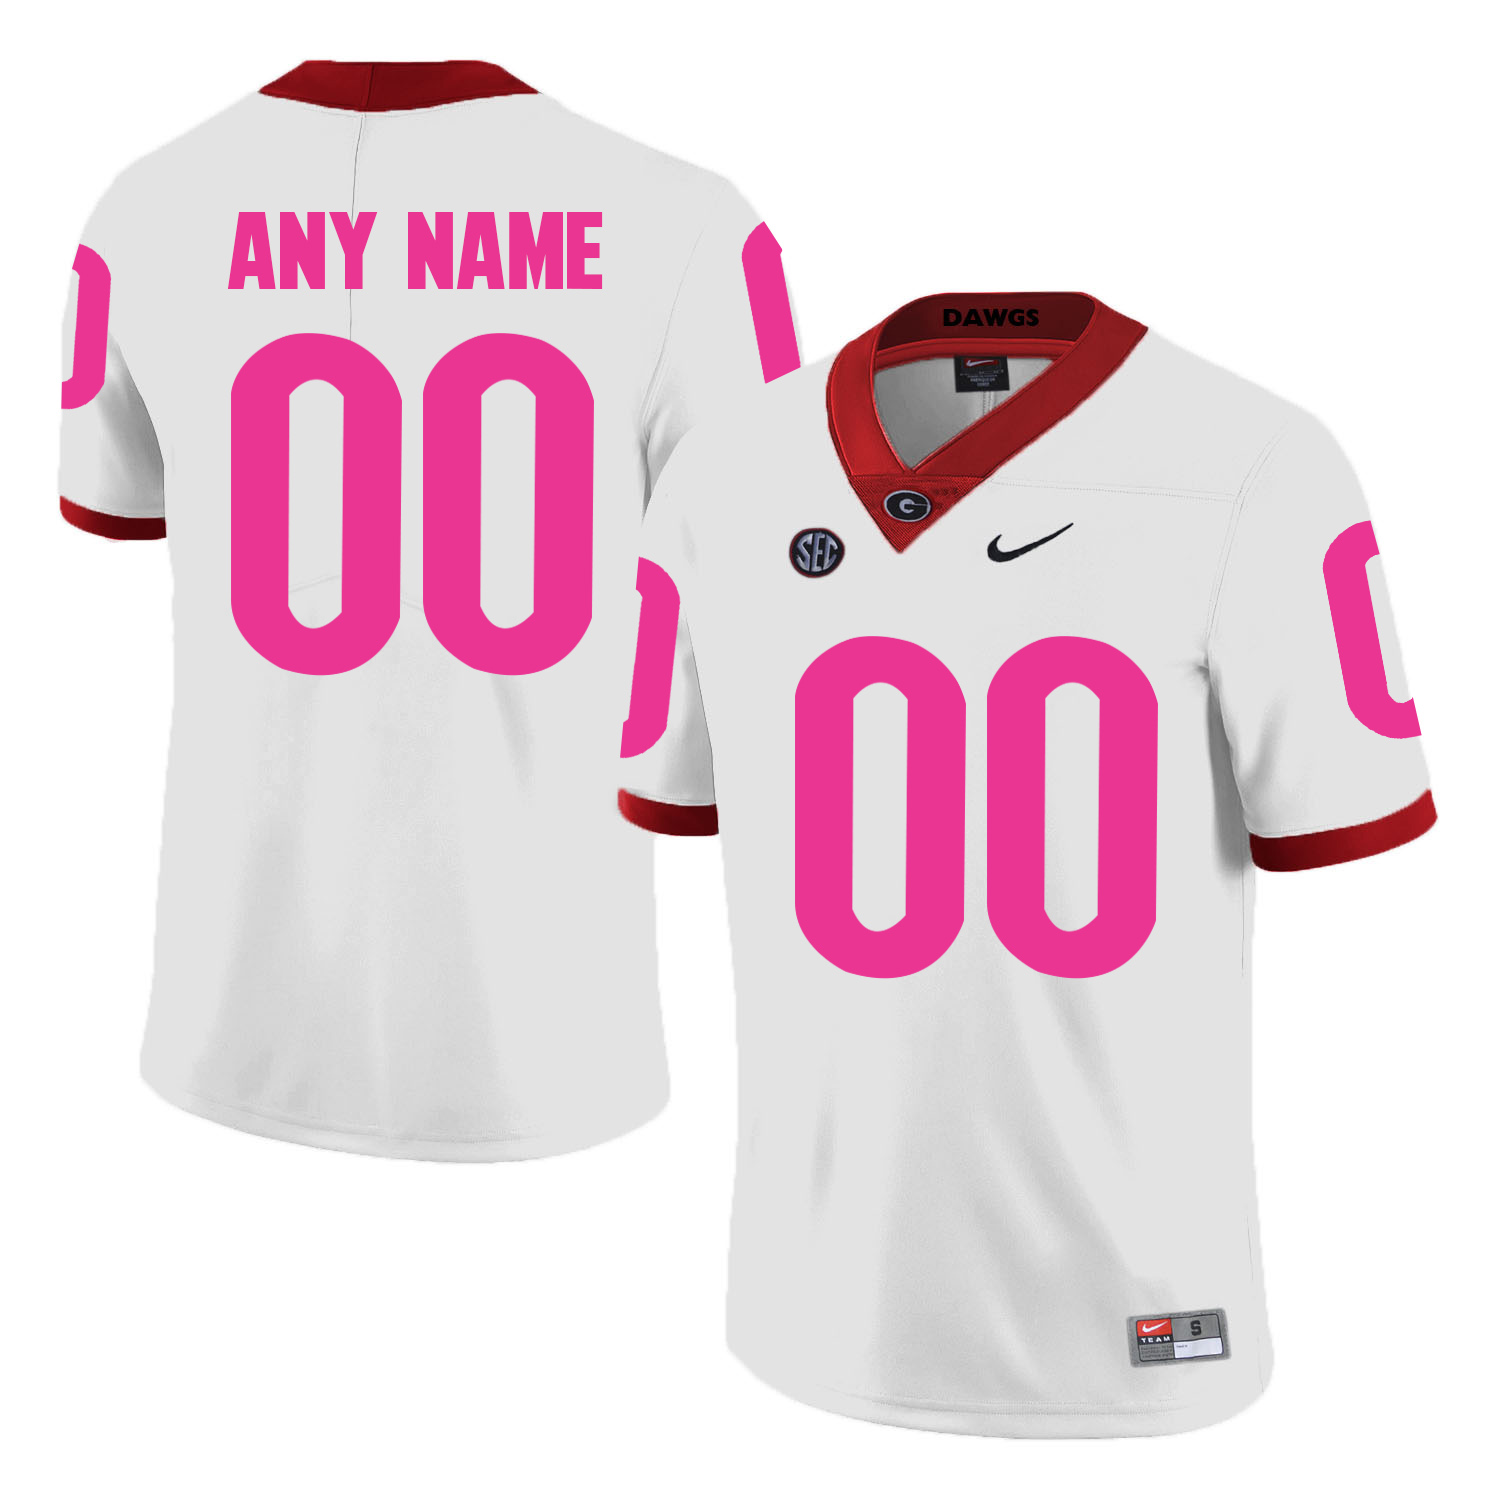 Georgia Bulldogs White Men's Customized 2018 Breast Cancer Awareness College Football Jersey